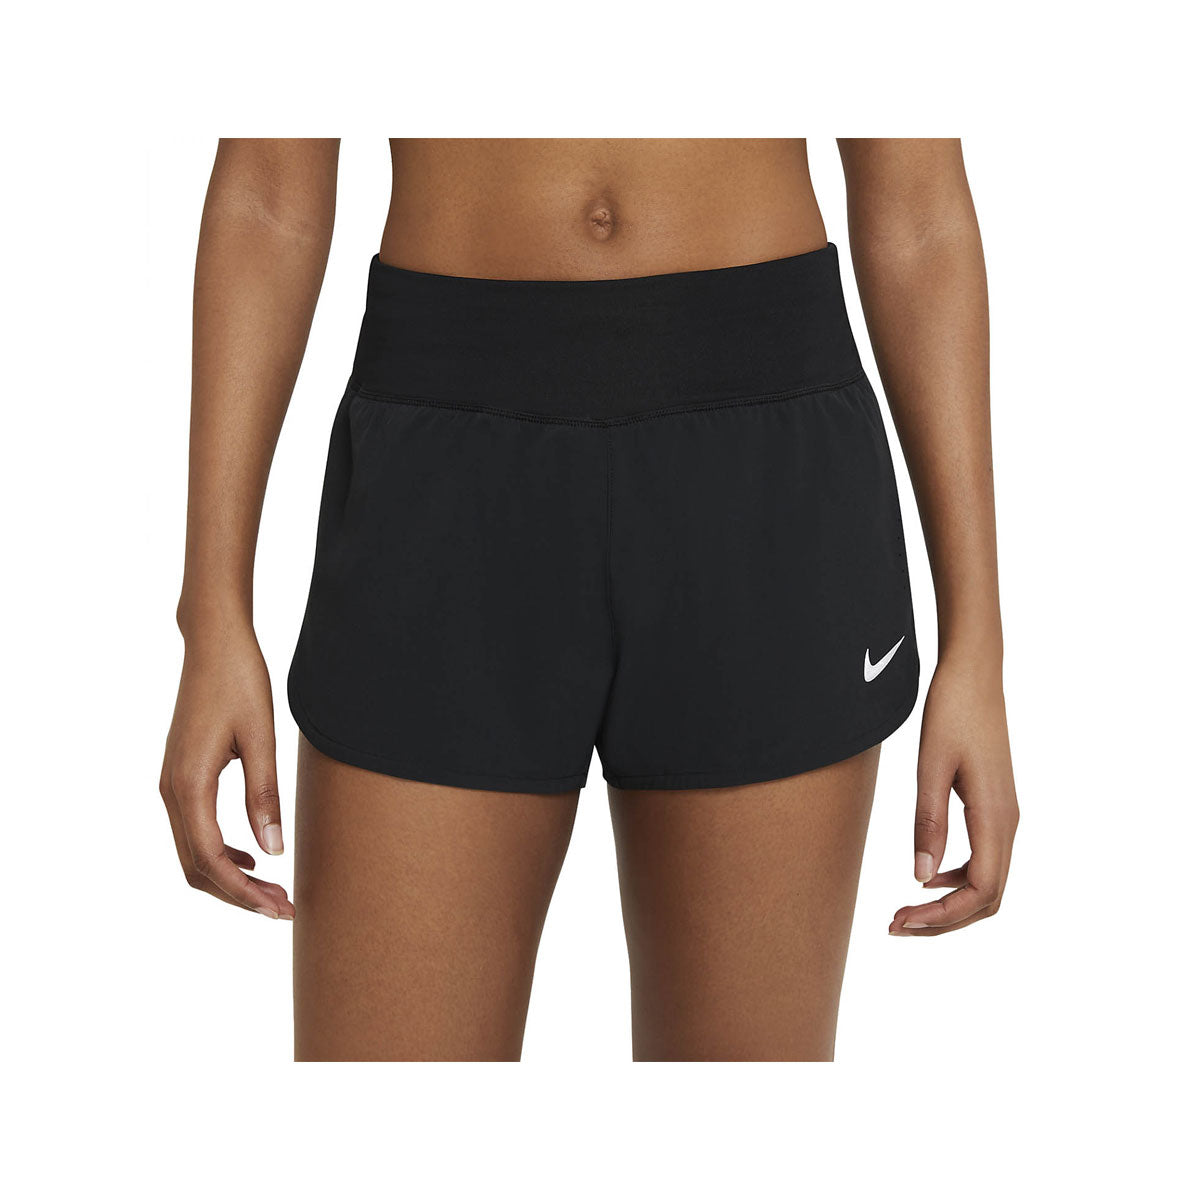 Nike Women's Eclipse Running Shorts